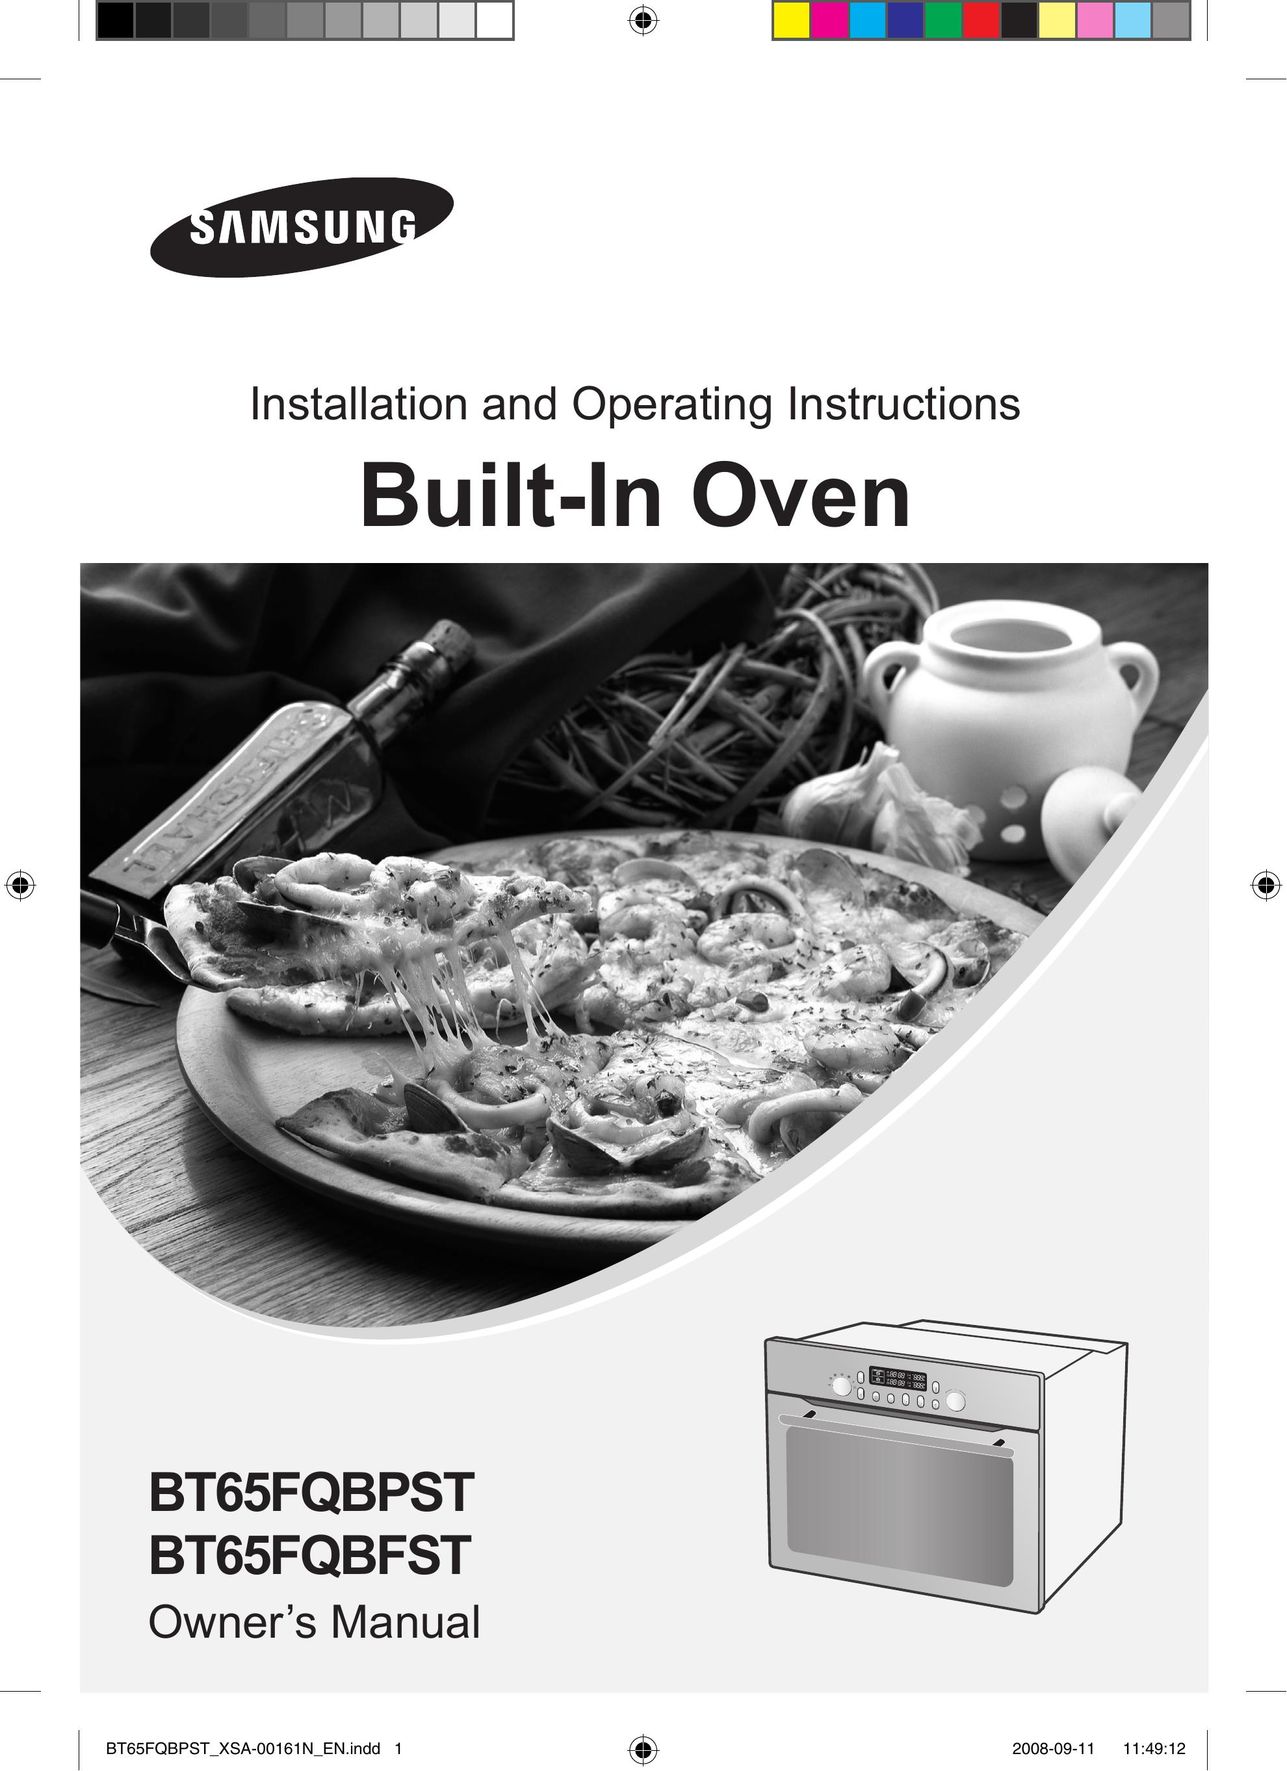 Samsung BT65FQBFST Oven User Manual